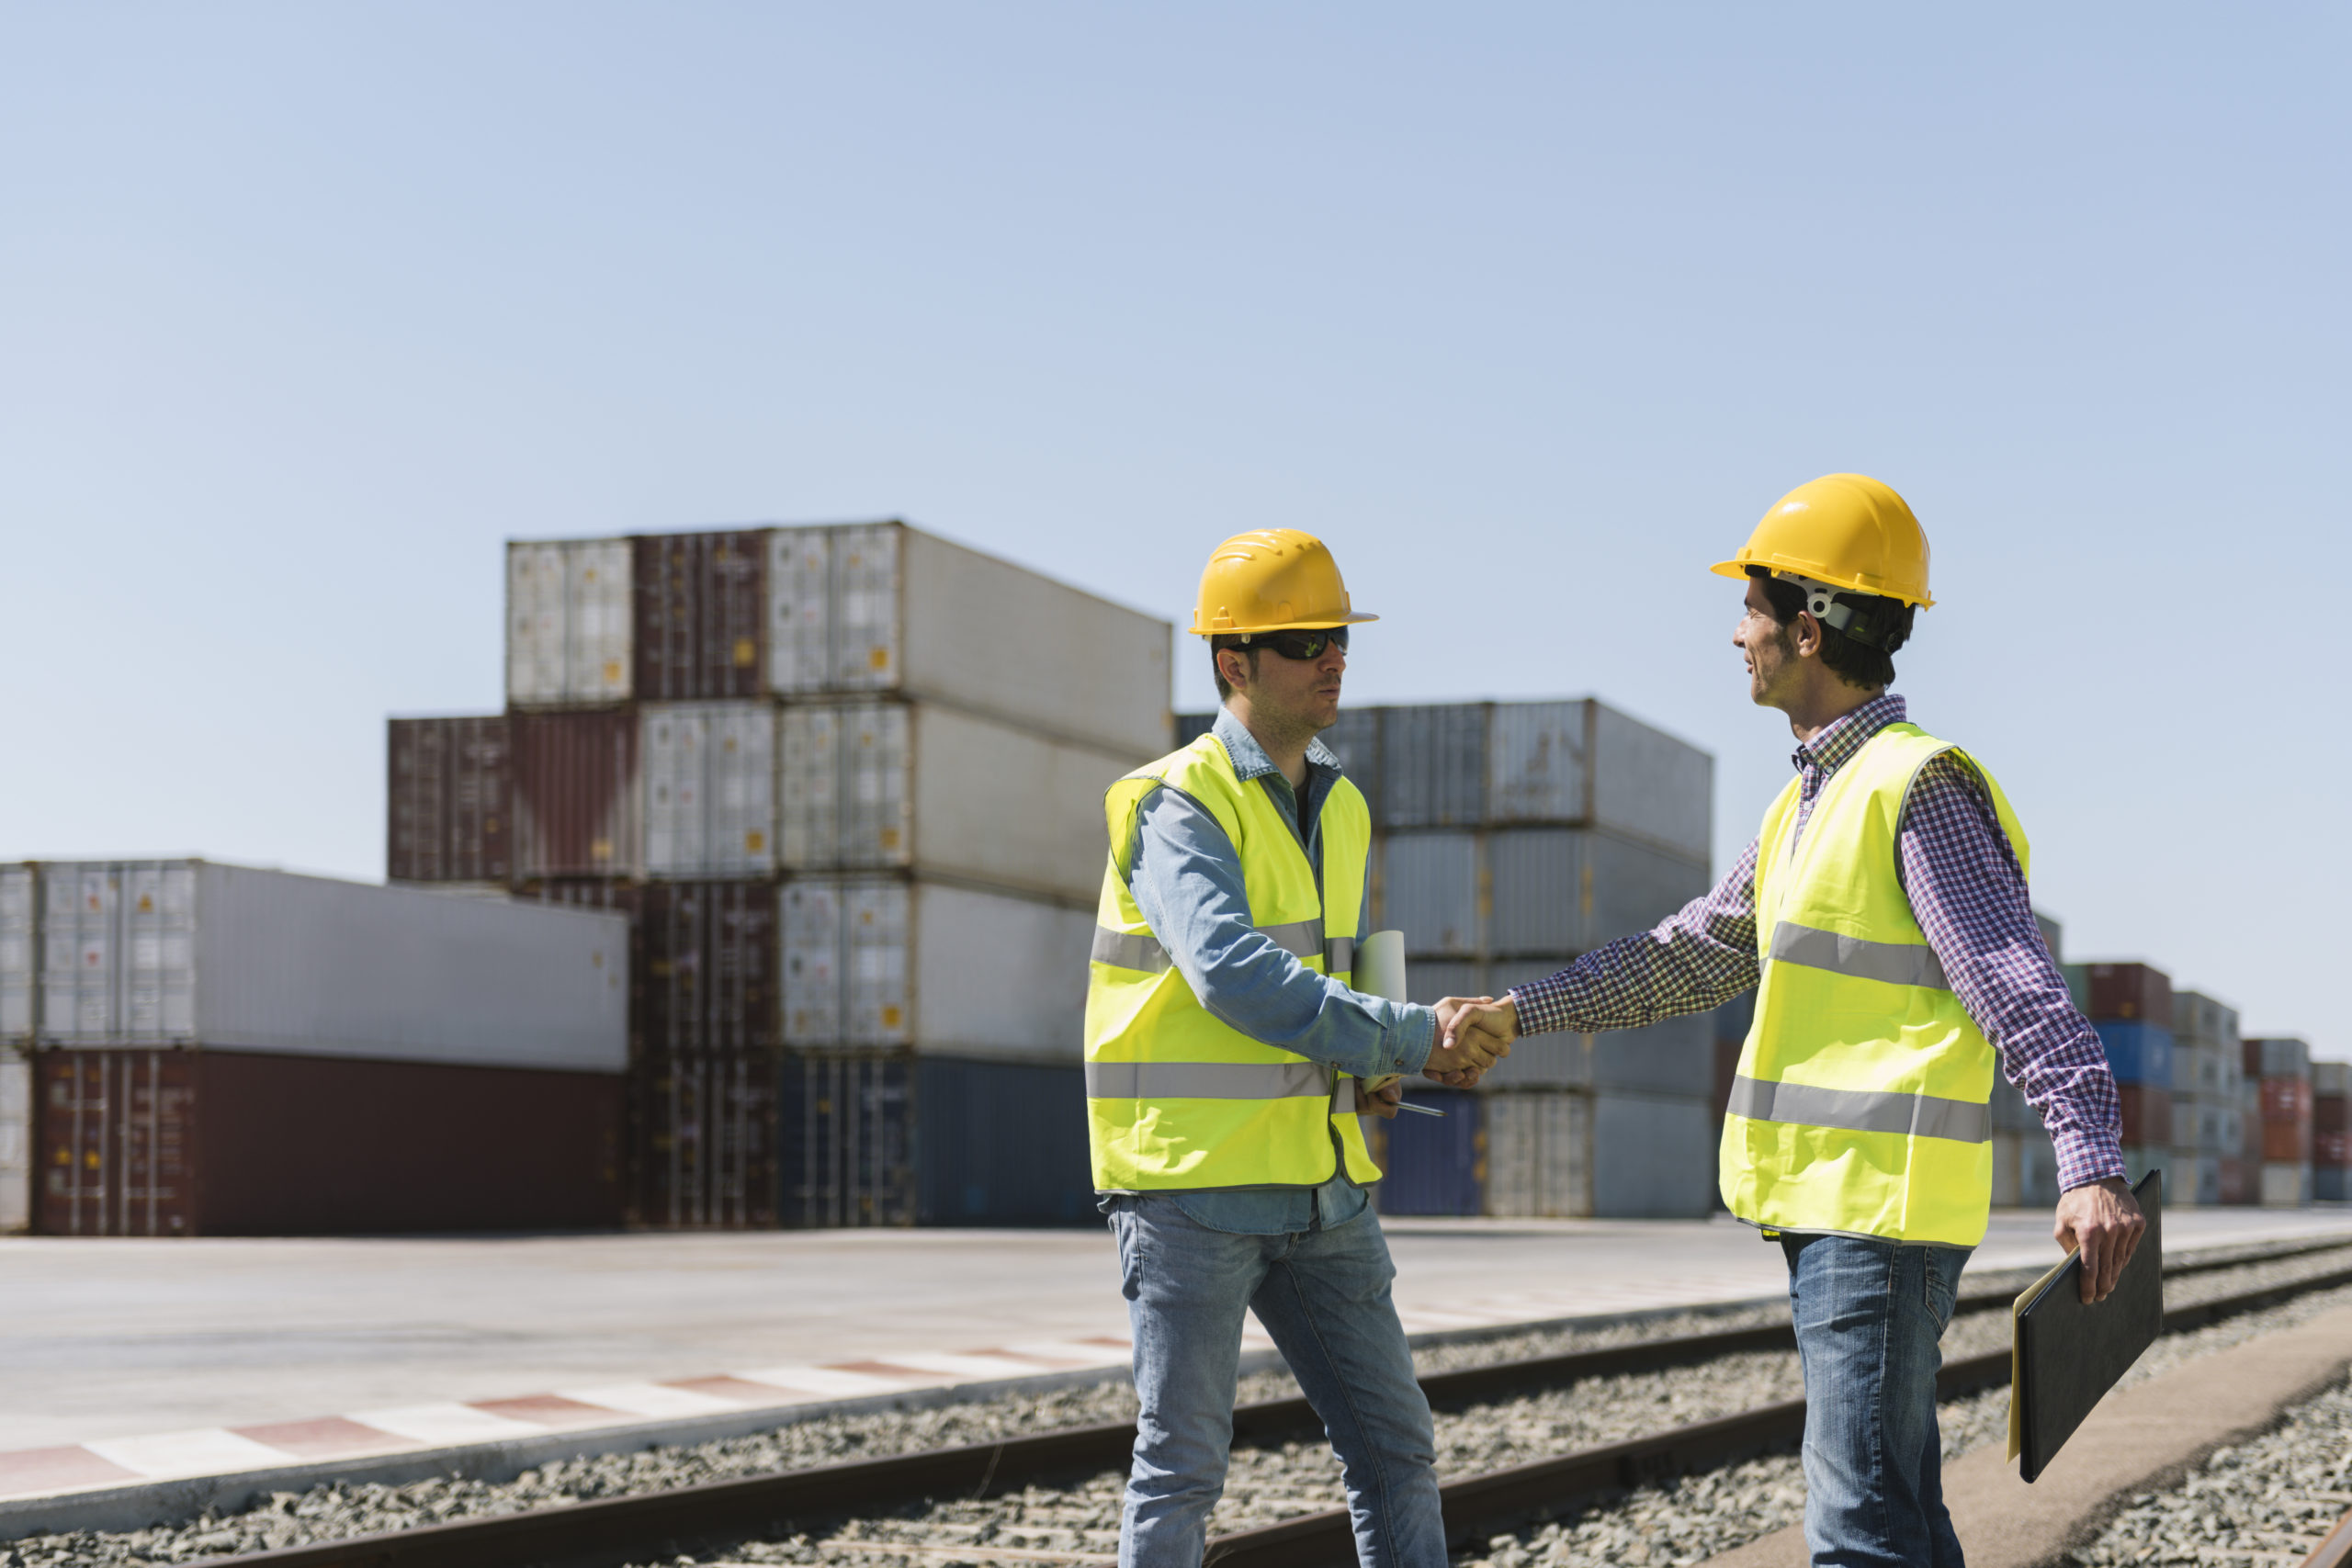 workers shaking hands on railway tracks near cargo 2022 03 08 01 02 33 utc